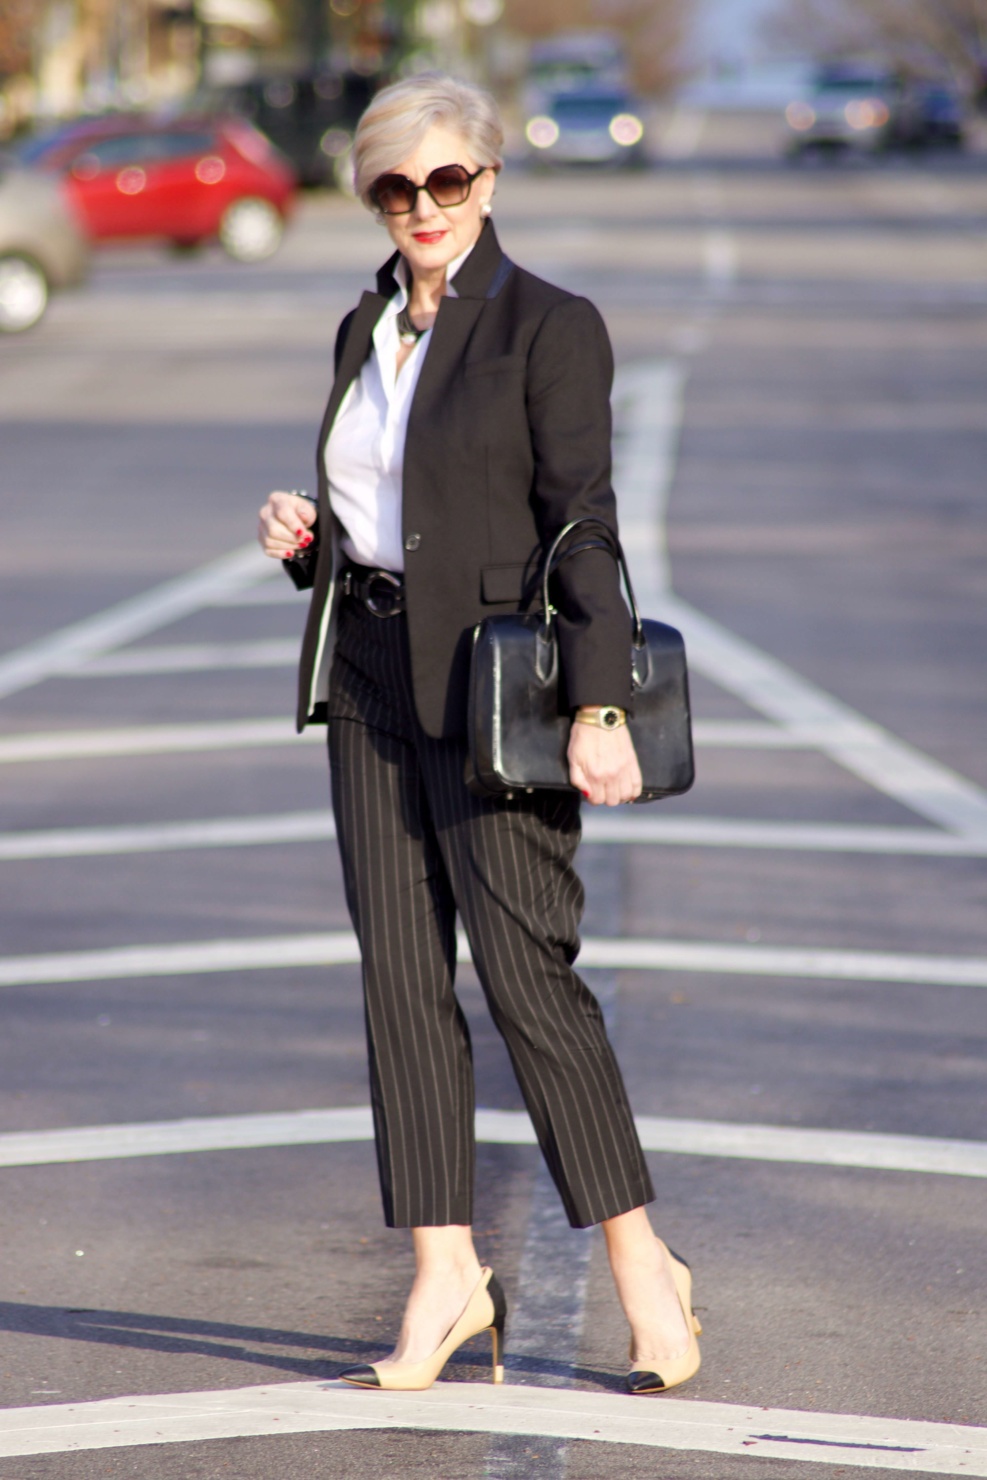 beth from Style at a Certain Age wears Ralph Lauren pinstripe pants, Misook white blouse, J.Crew black blazer, cap toe pumps and black handbag